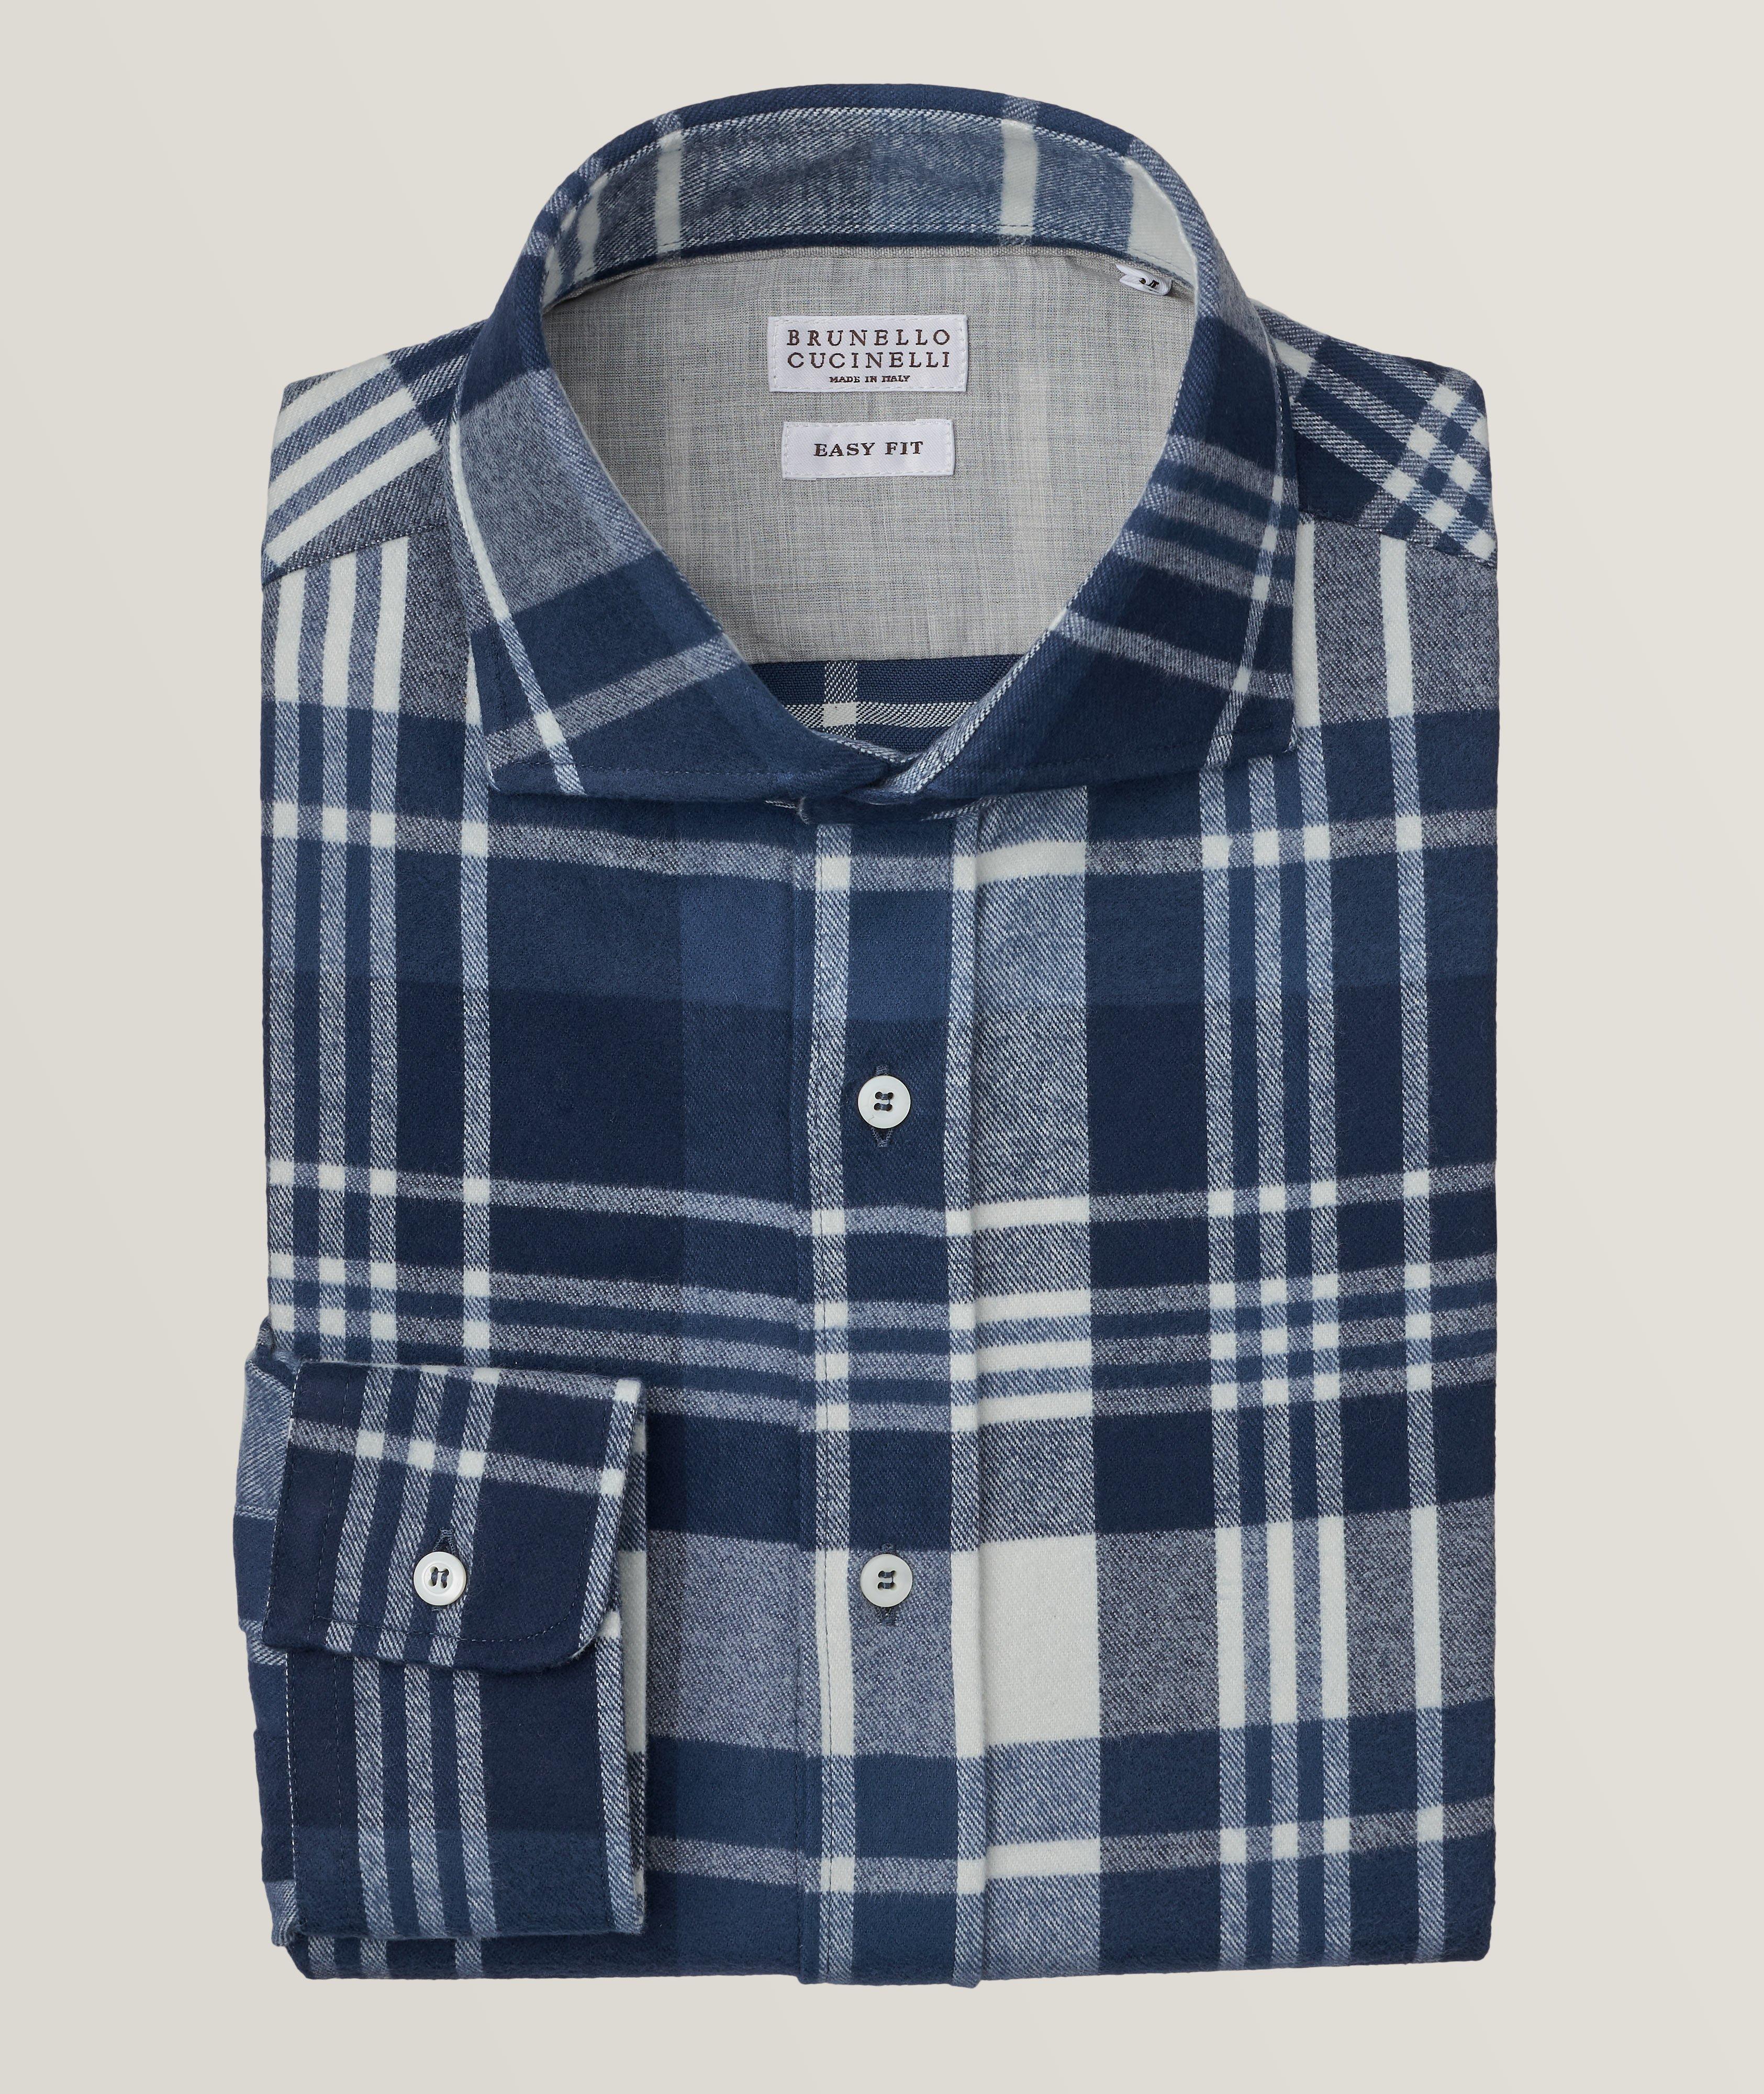 Easy-Fit Plaid Flannel Cotton Shirt image 0